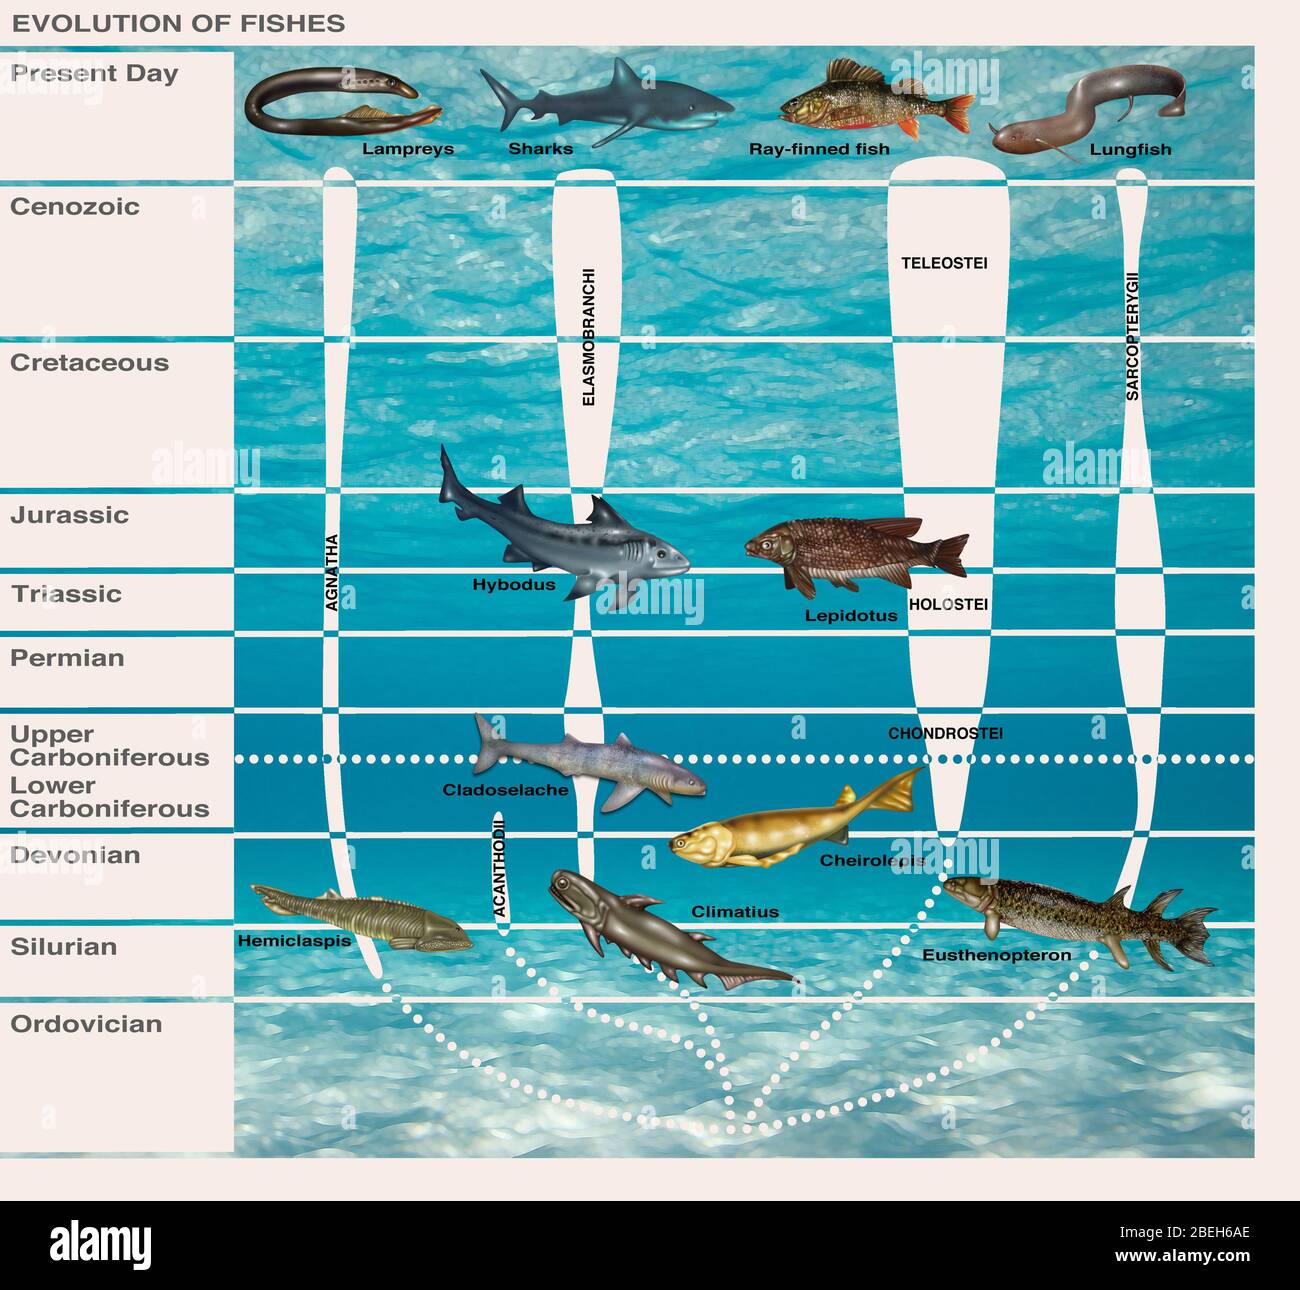 Evolution of Fishes, Illustration Stock Photo